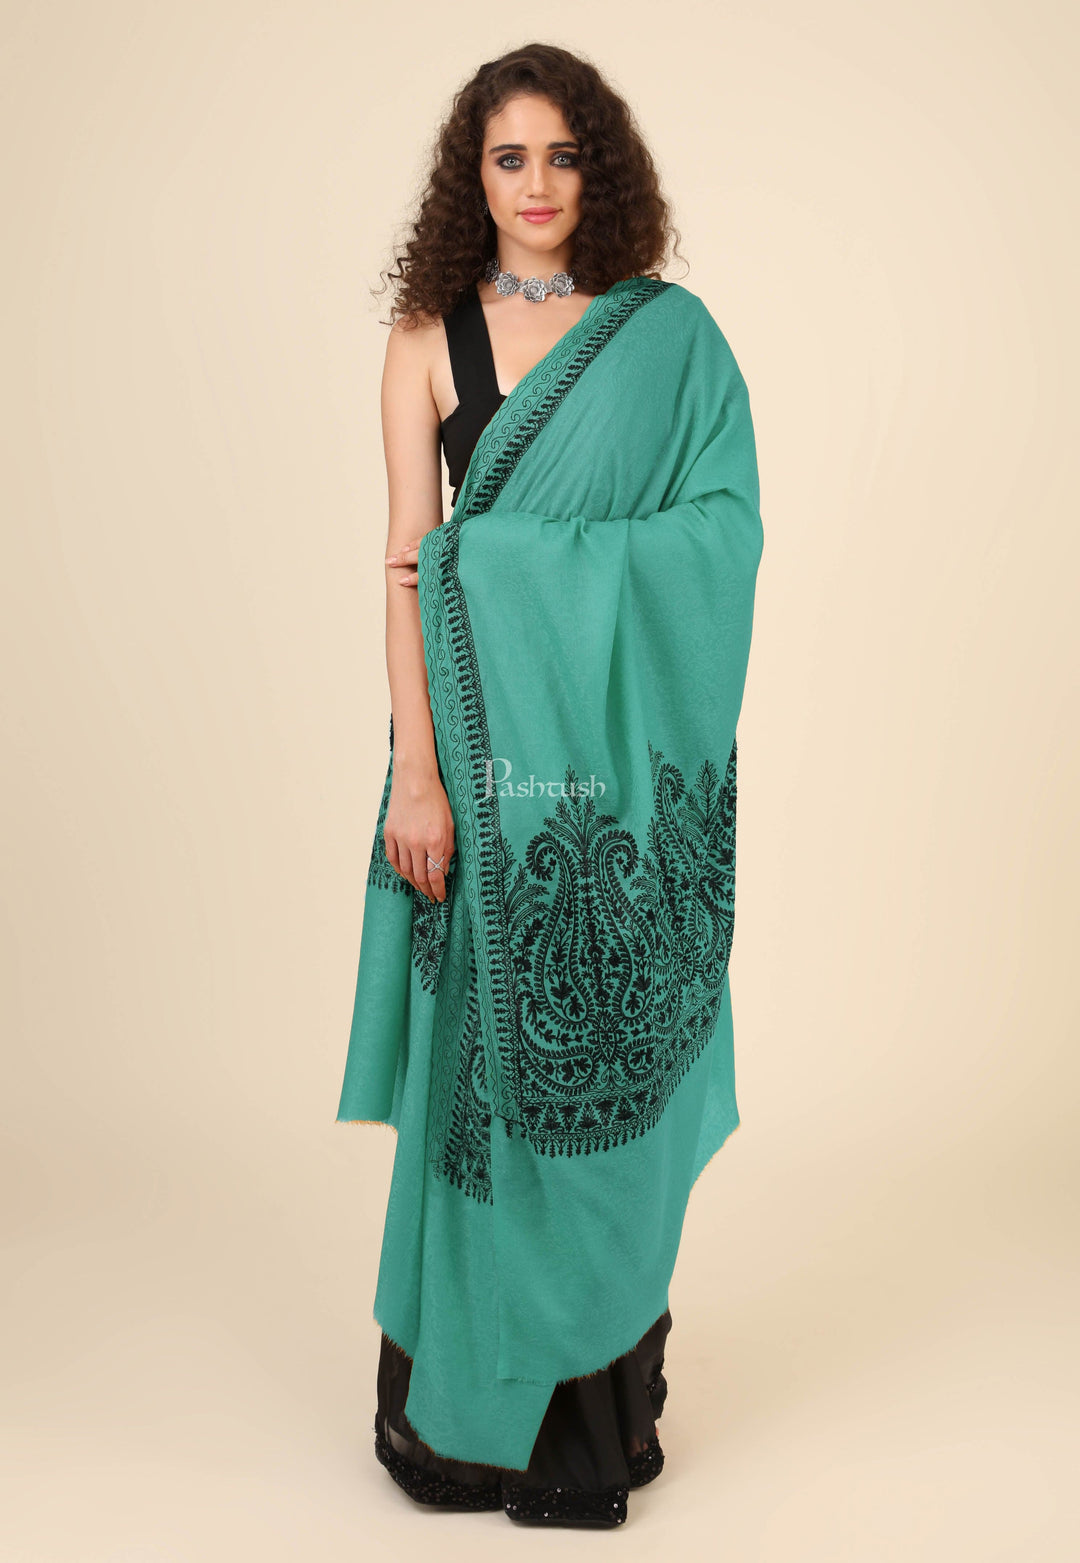 Pashtush India Womens Shawls Pashtush Womens Fine Wool Shawl, With Tone On Tone Nalki Embroidery, Soft And Warm, Arabic Sea Blue